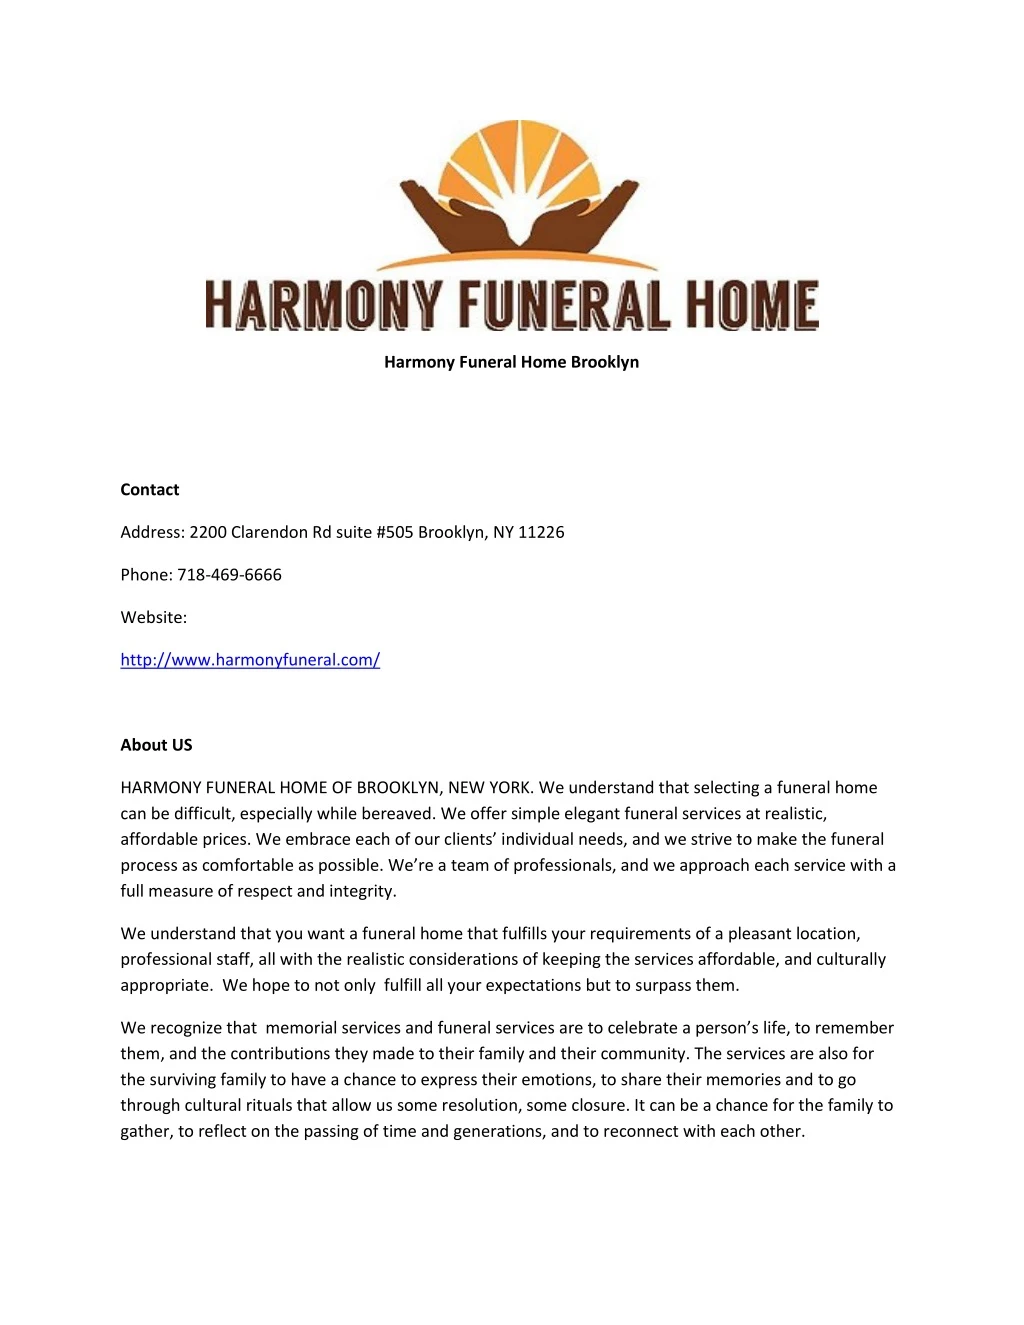 harmony funeral home brooklyn